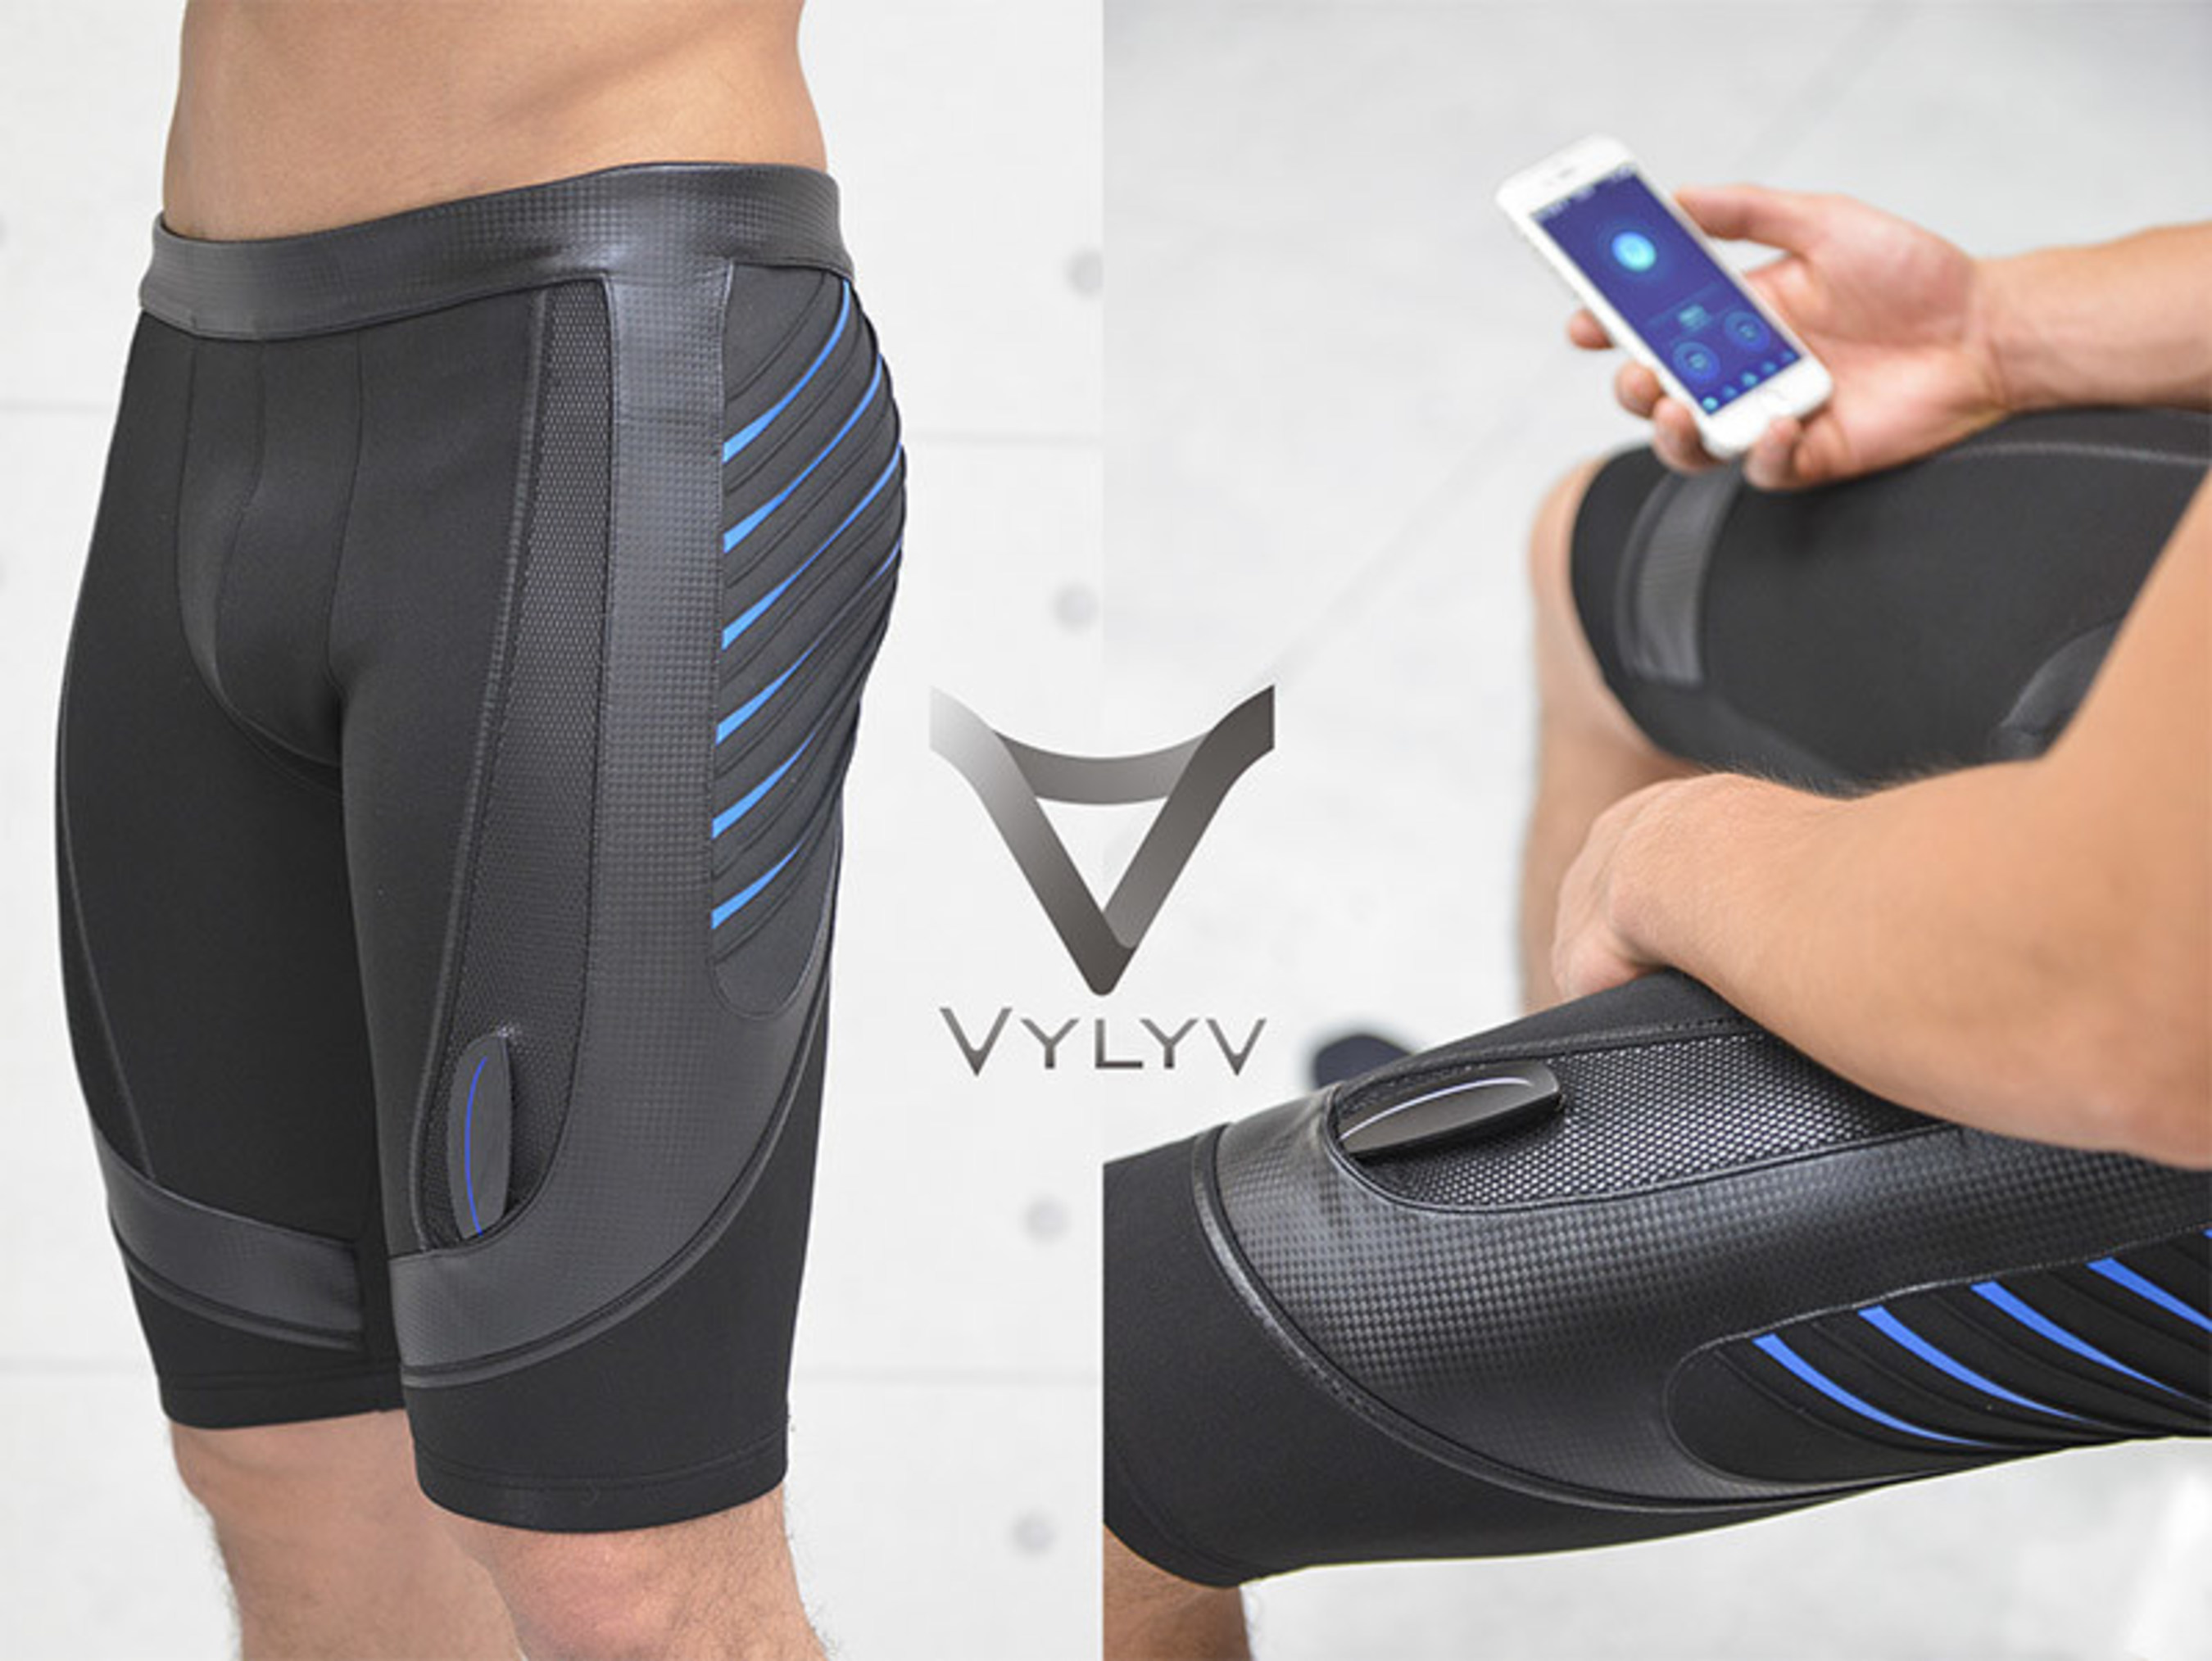 Vylyv Lab S Smart Shorts Enable Men To Strengthen Pelvic Floor